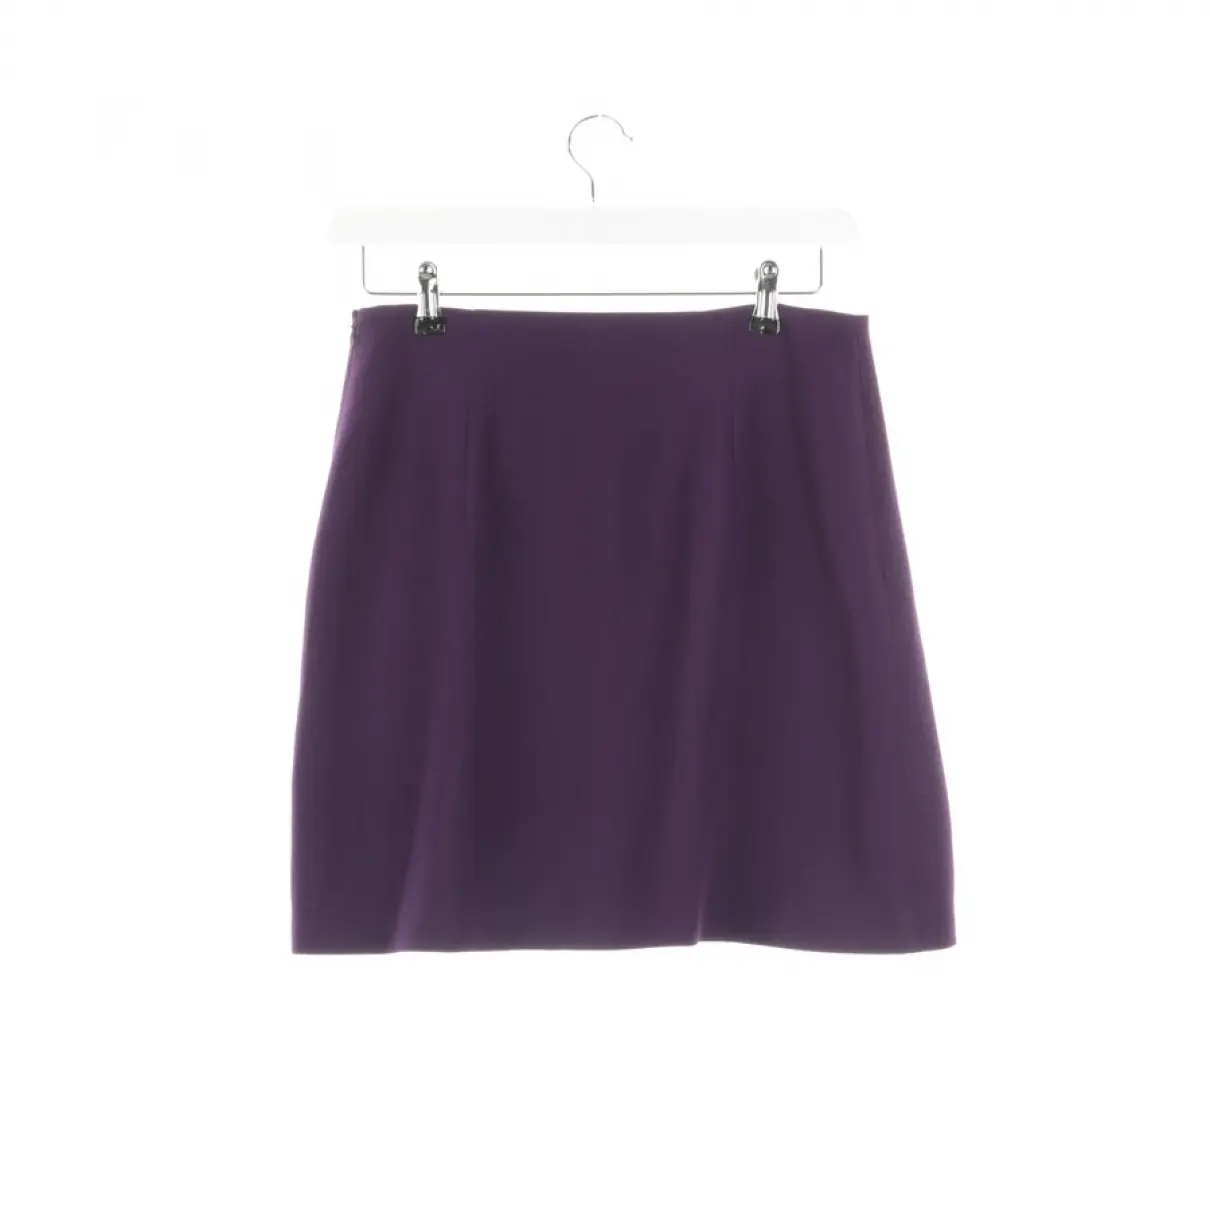 Buy Club Monaco Skirt online